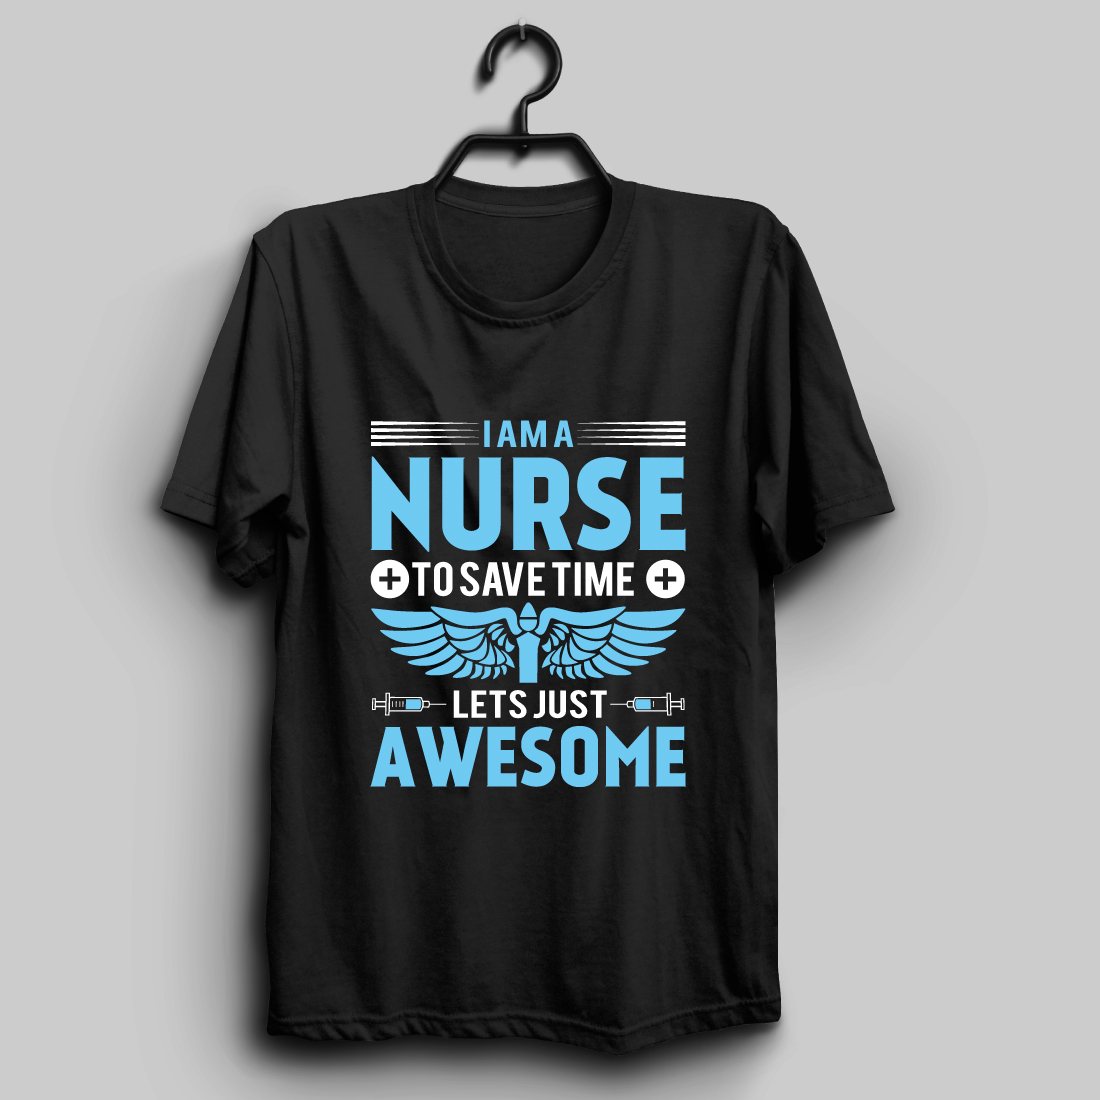 nurse t shirt design02 800